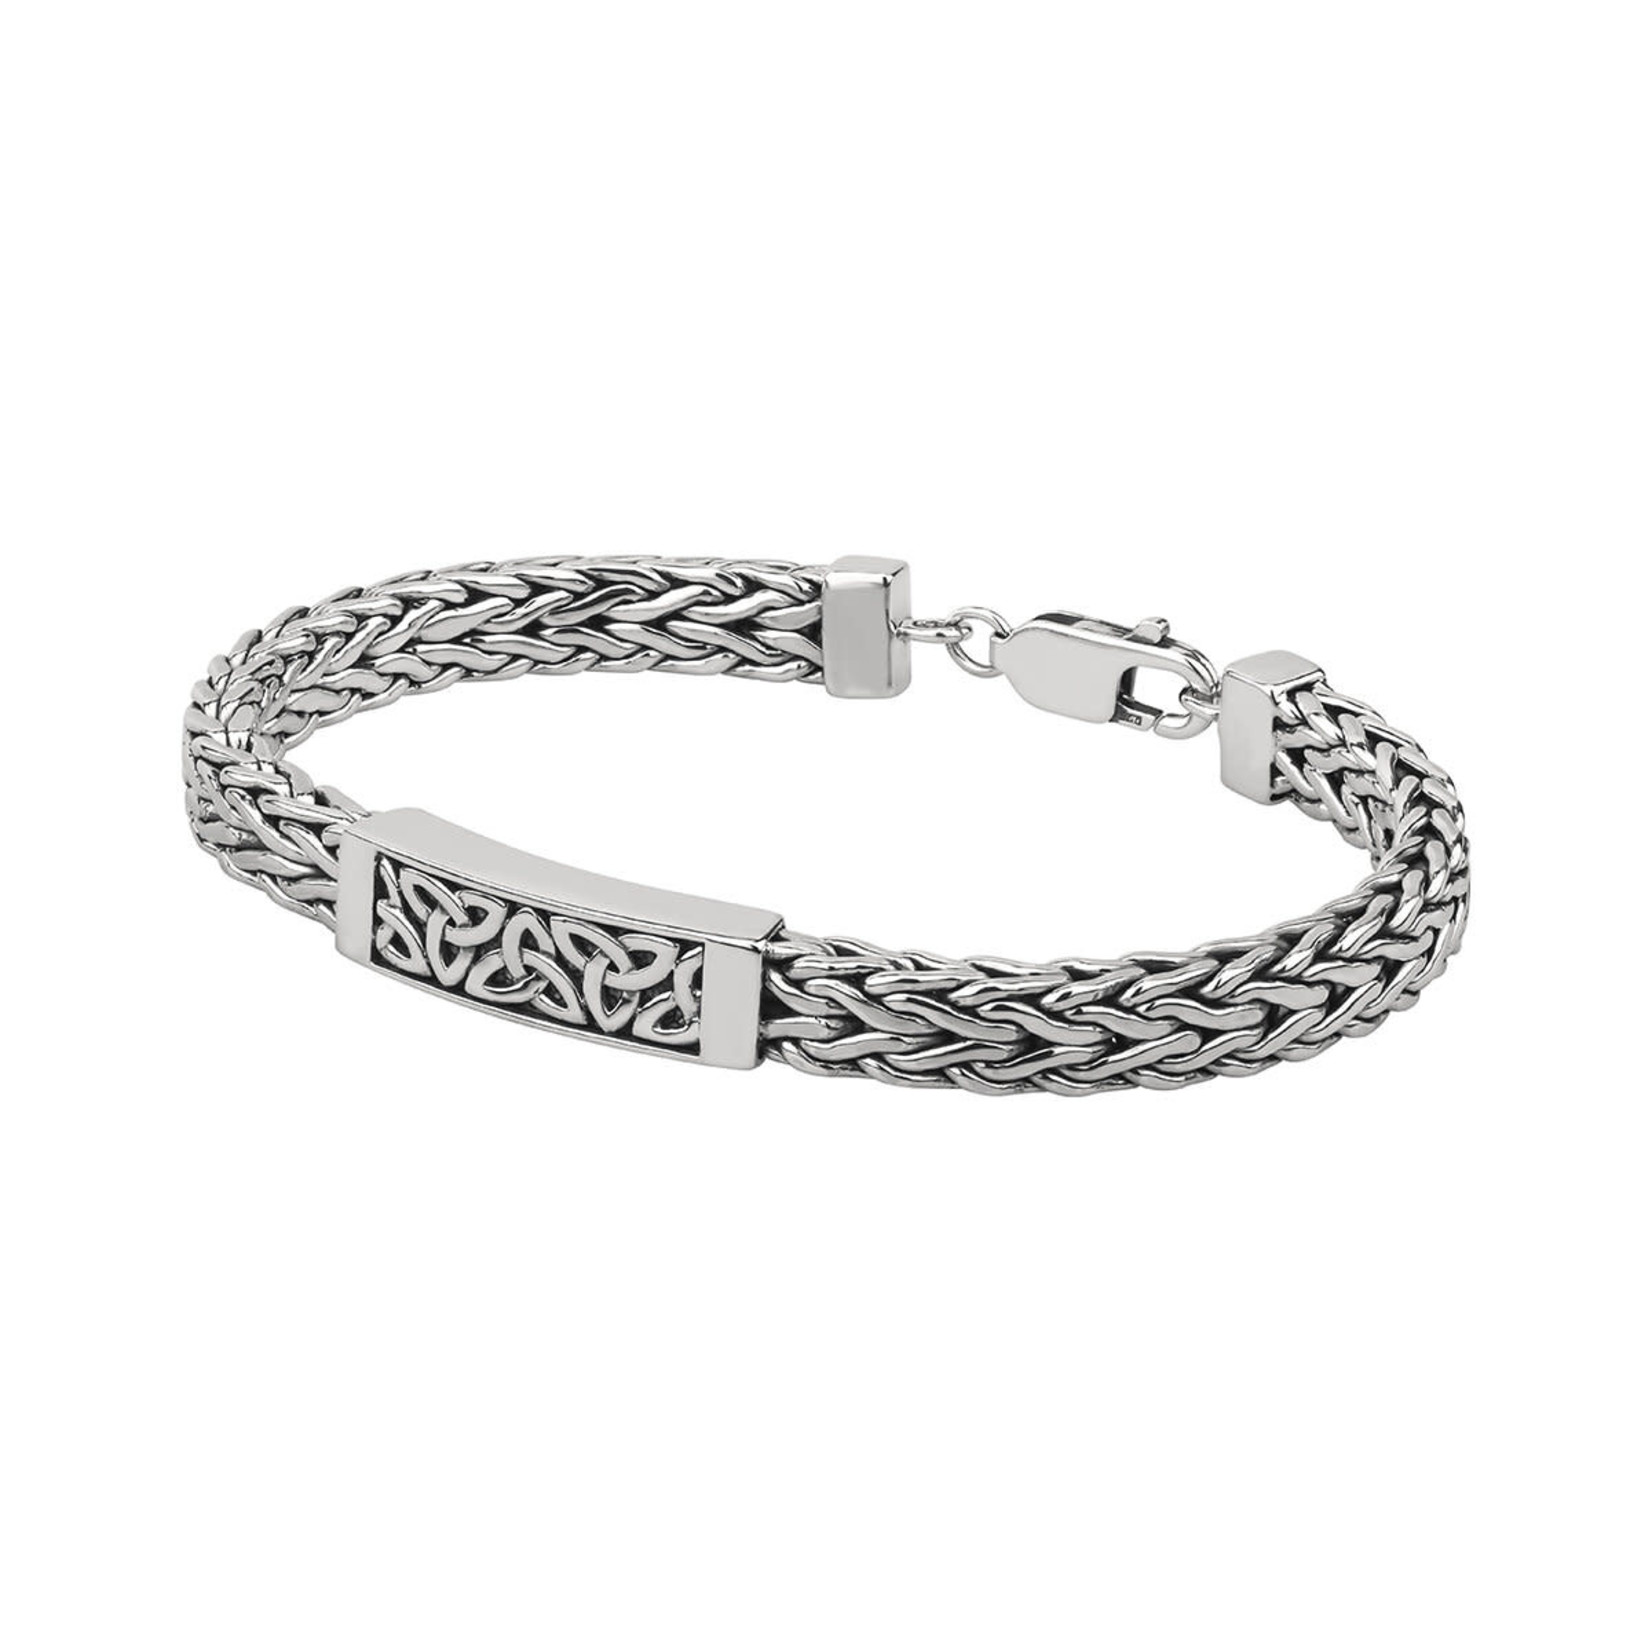 Solvar S/S Men's Trinity Knot Bracelet